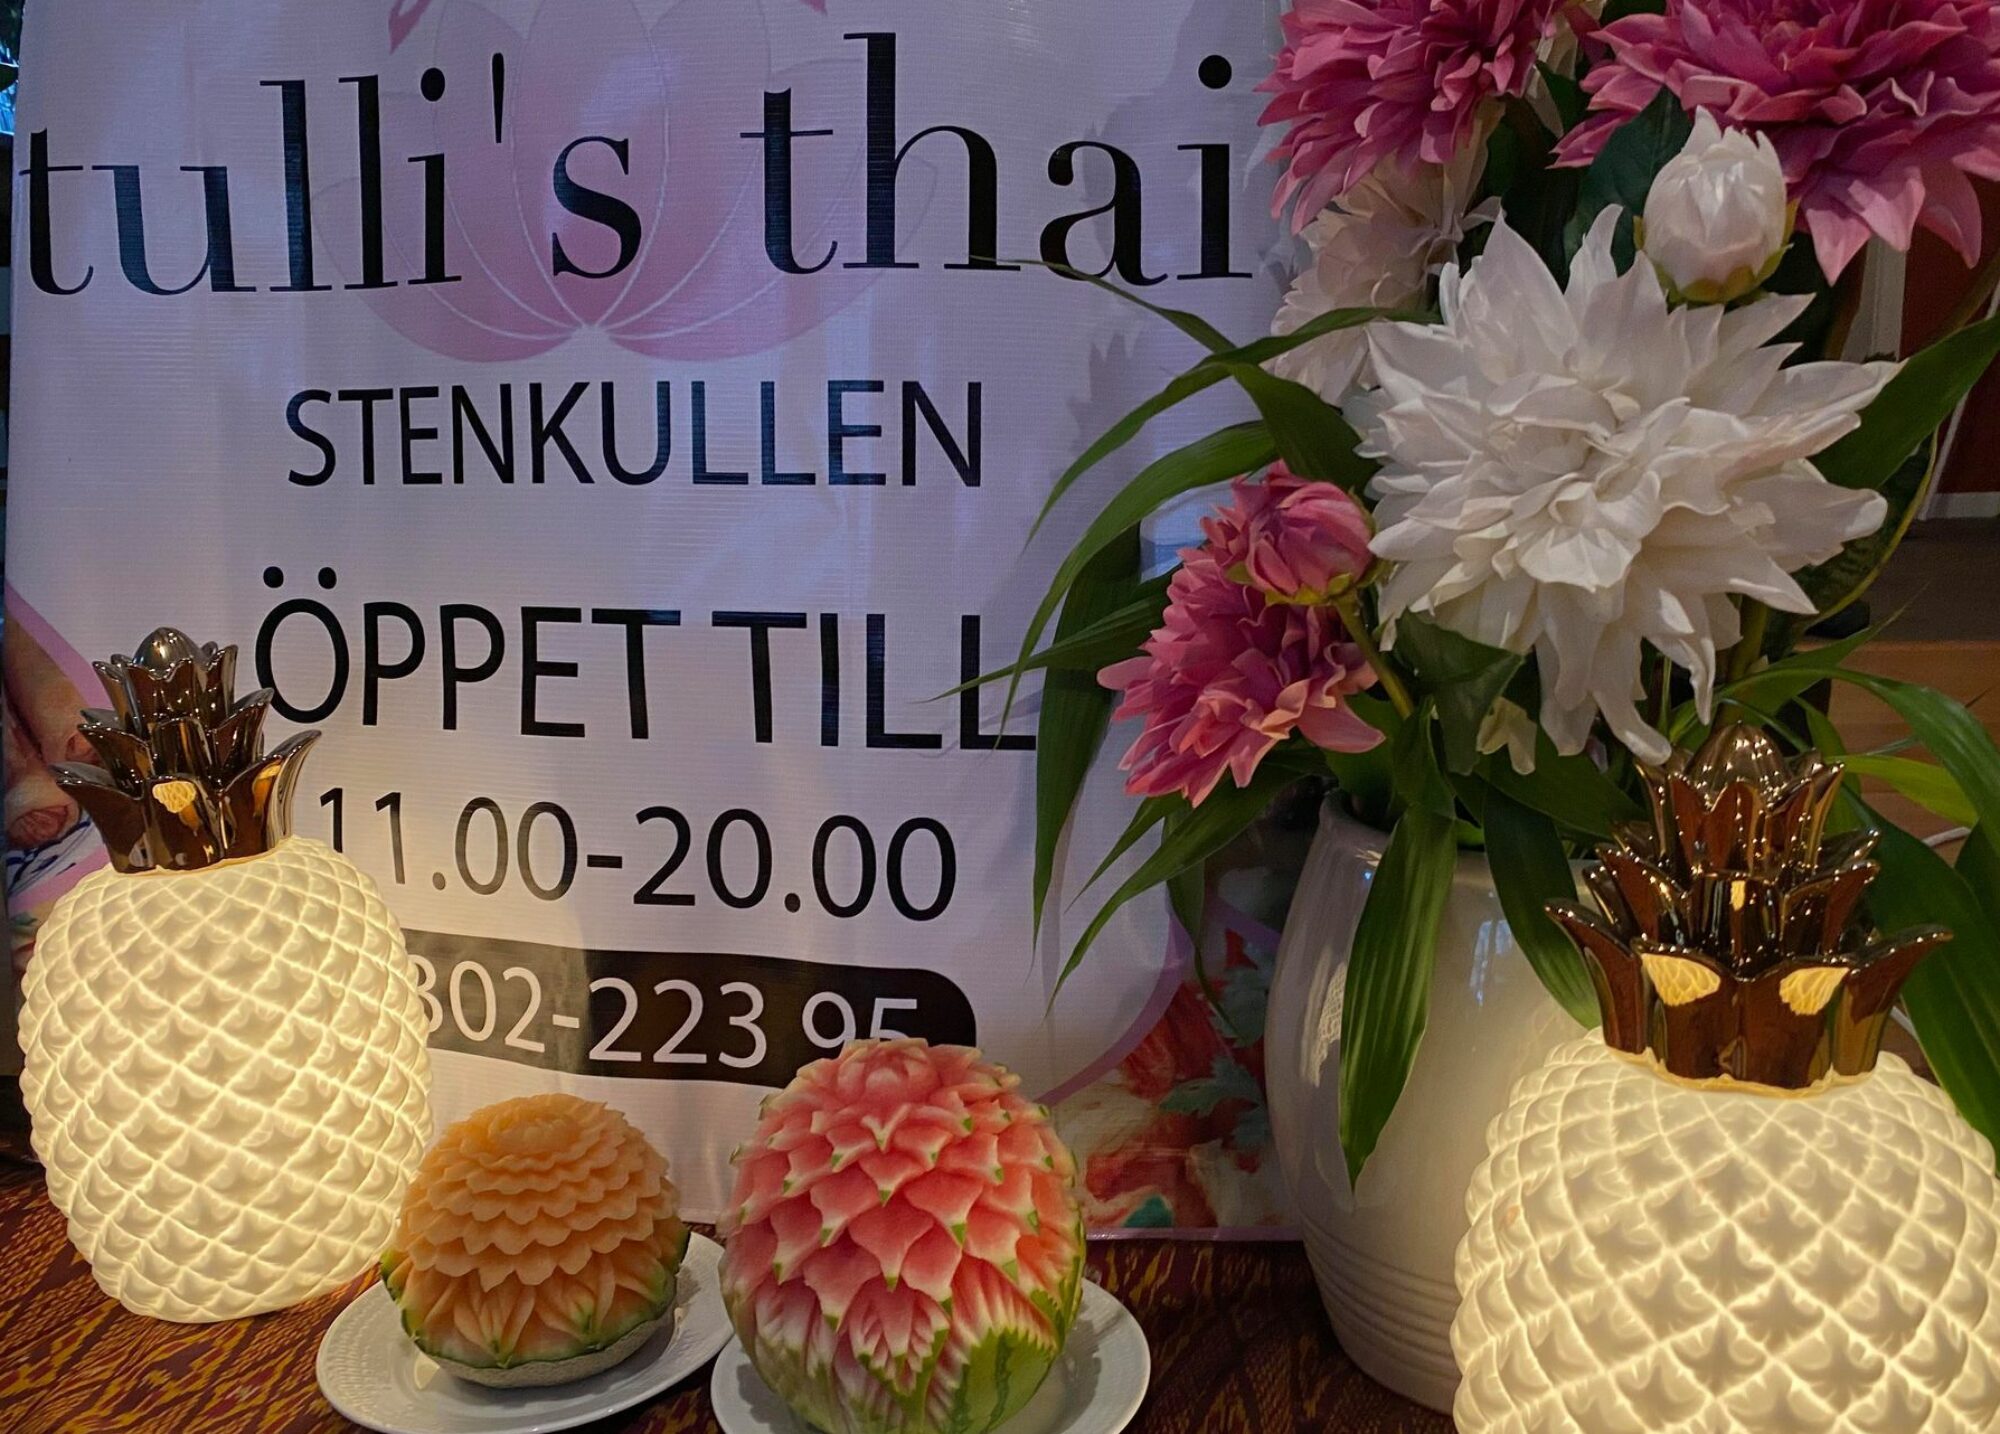 Tulli's Thai